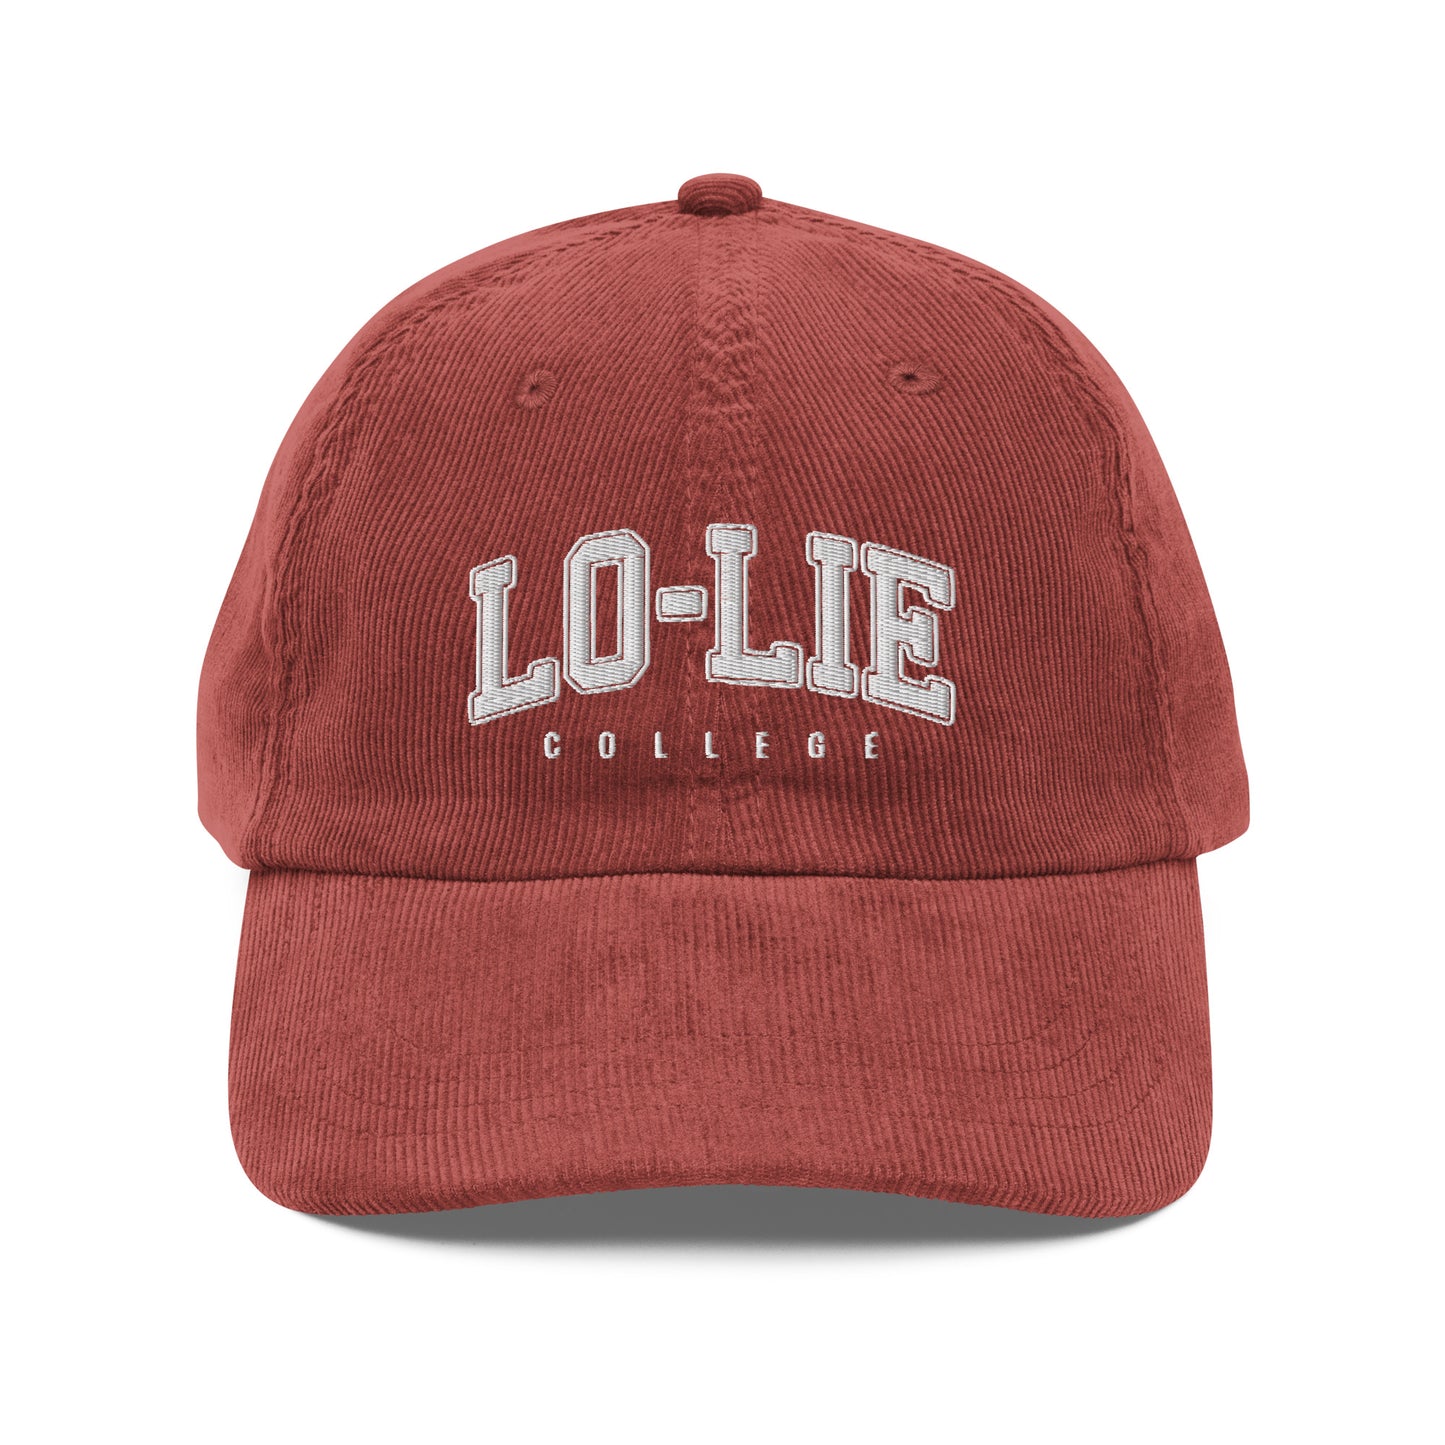 College Vintage corduroy cap